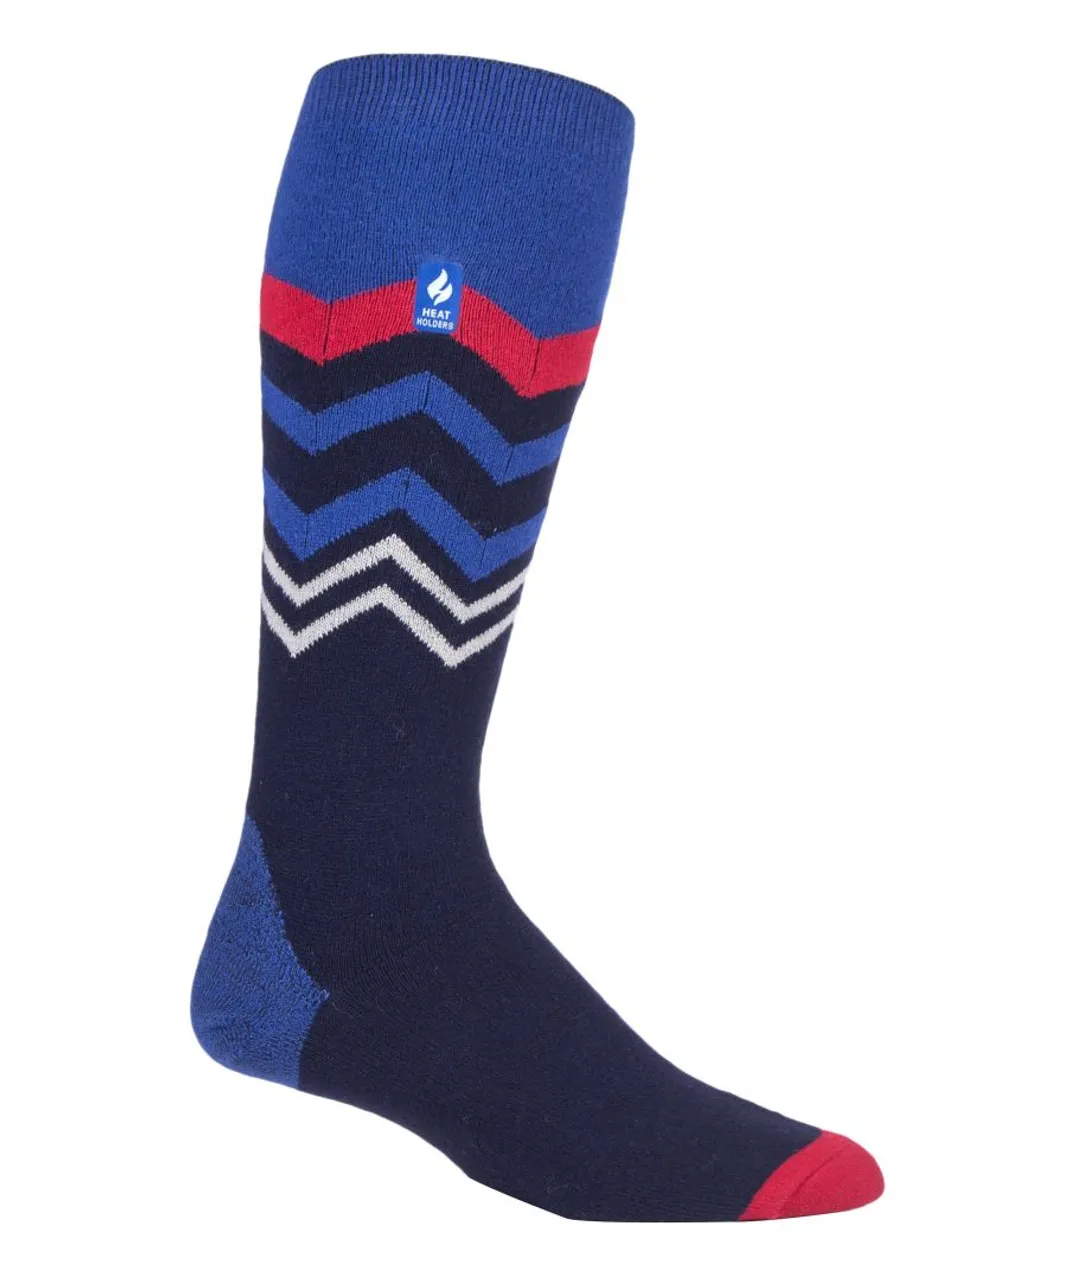 Heat Holders Mens LITE - Ladies Thermal Ultra Thin Funky Ski Socks - Blue